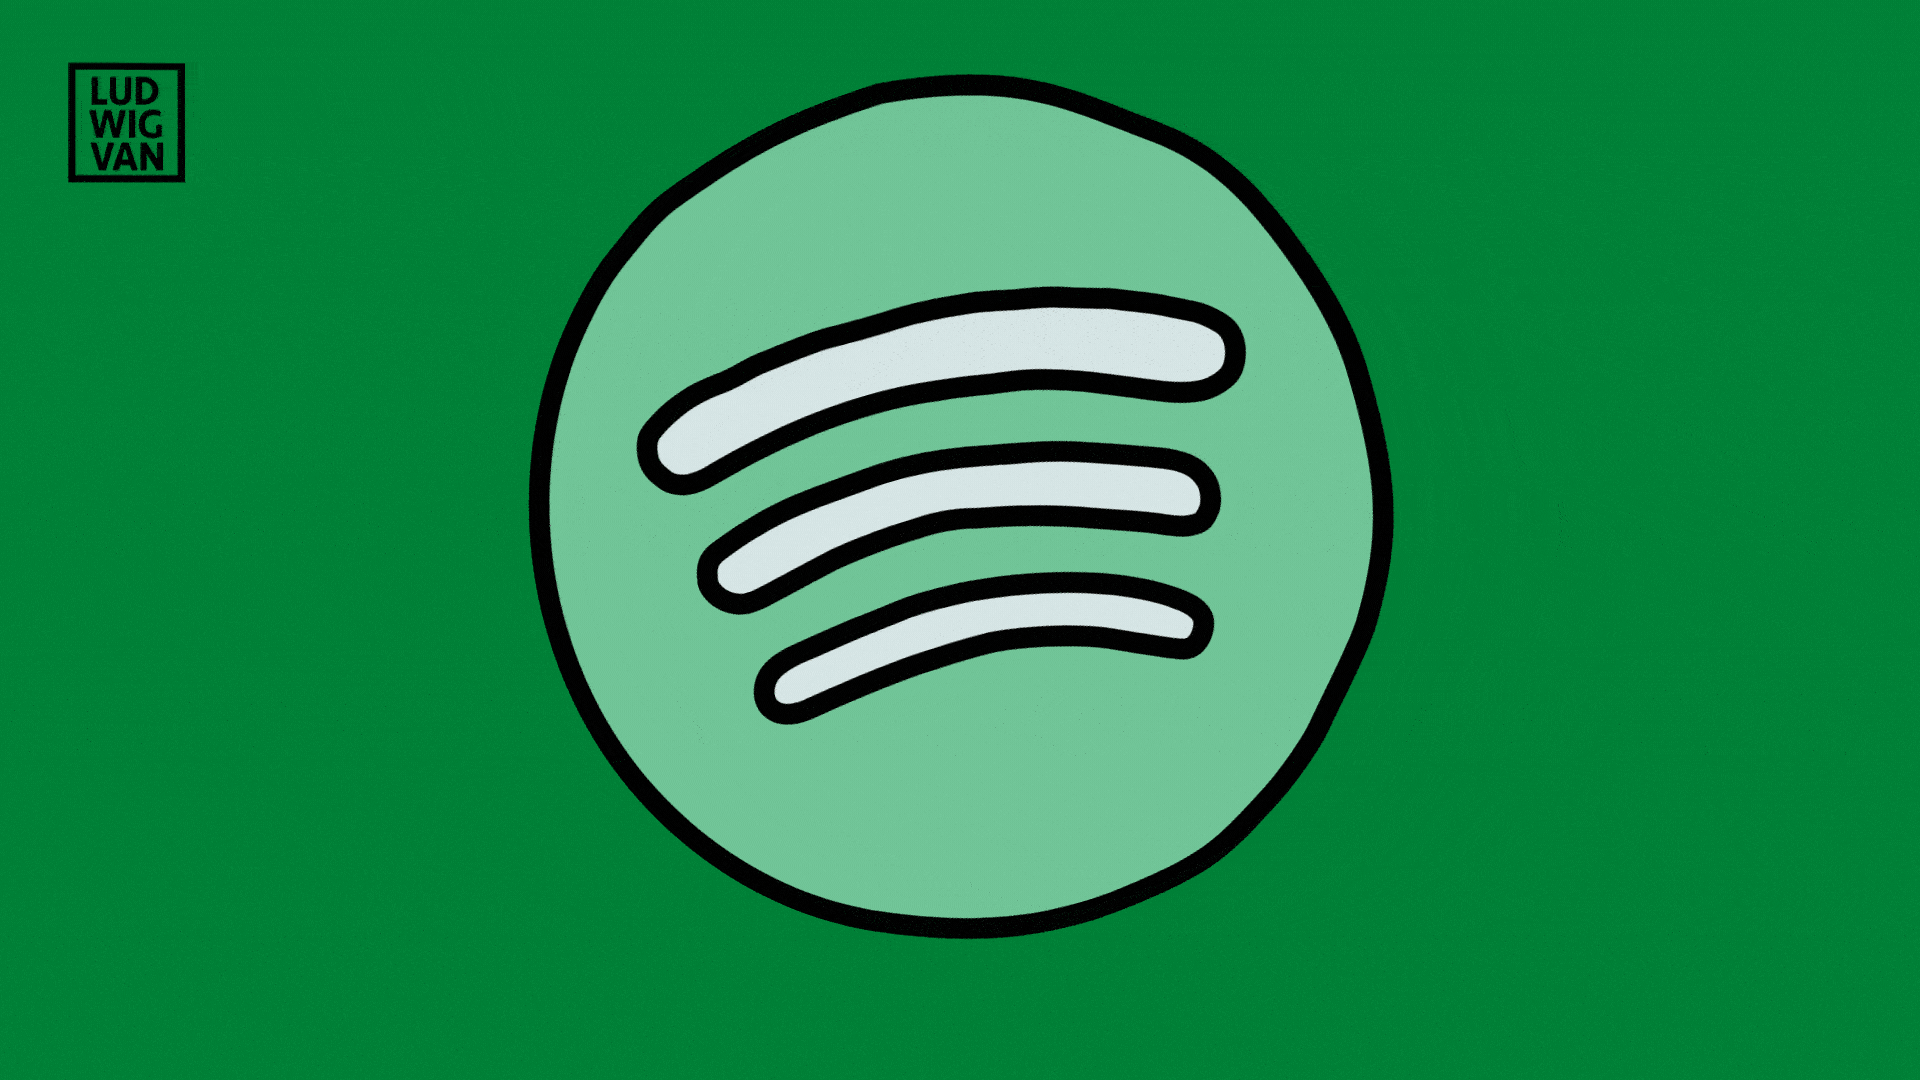 Spotify Logo Wallpapers - Top Free Spotify Logo Backgrounds ...